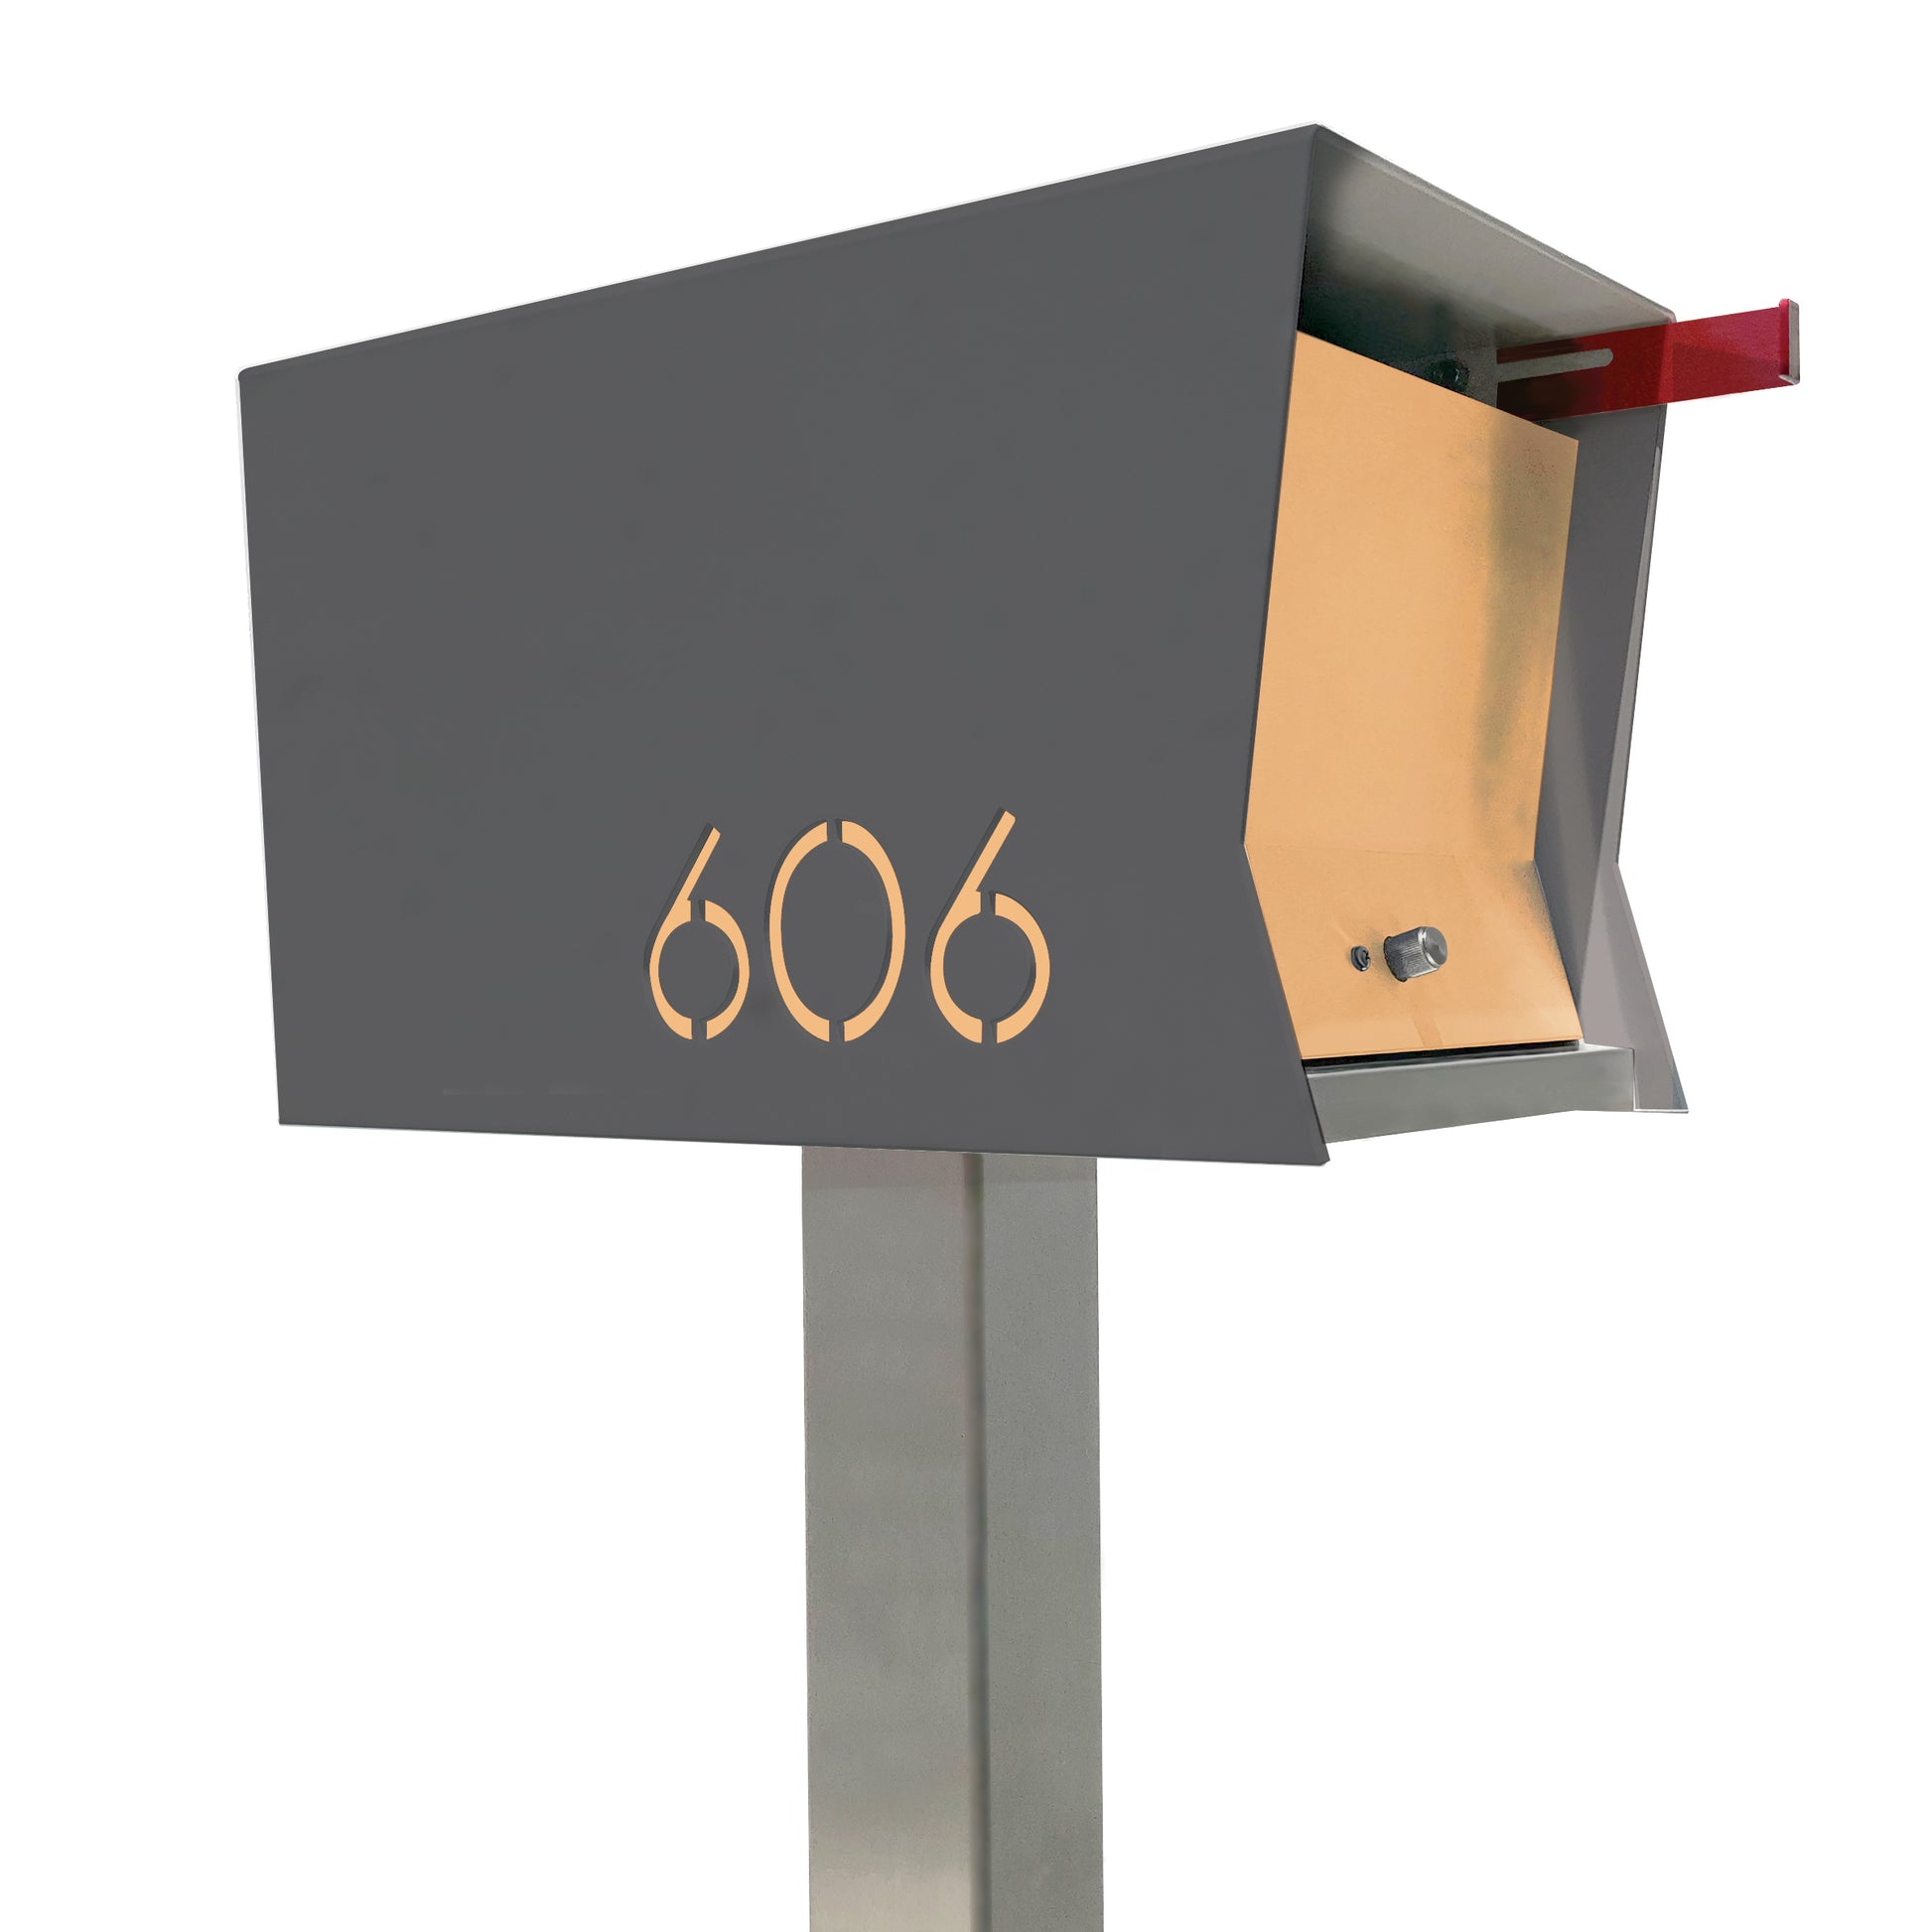 The Original Retrobox in DESIGNER GRAY - Modern Mailbox grey and peach